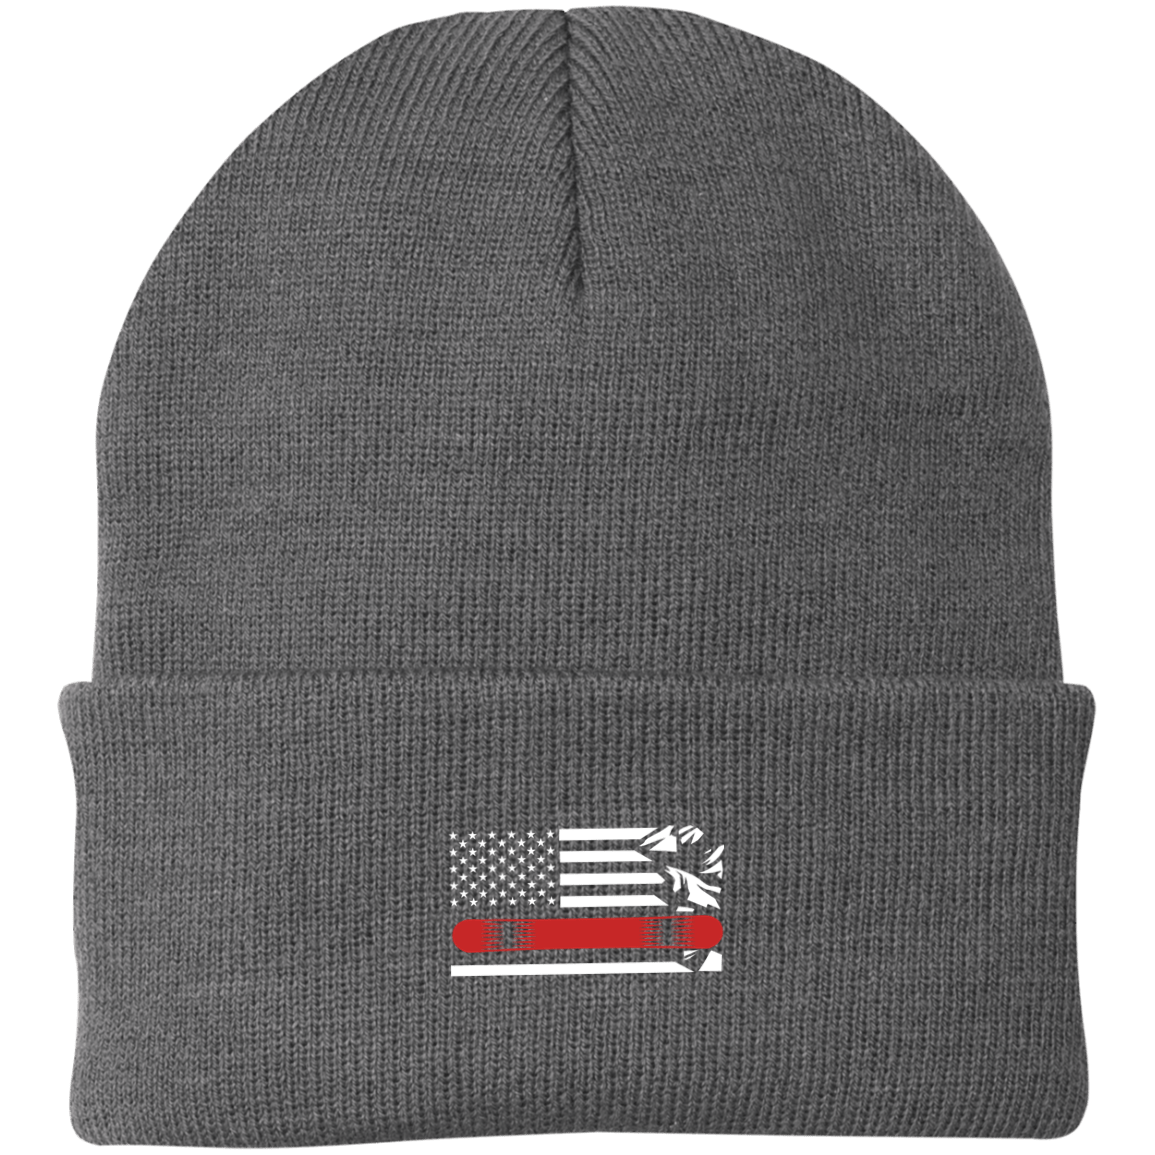 US Snowboard Flag Thin Red Line Knit Cap - Powderaddicts